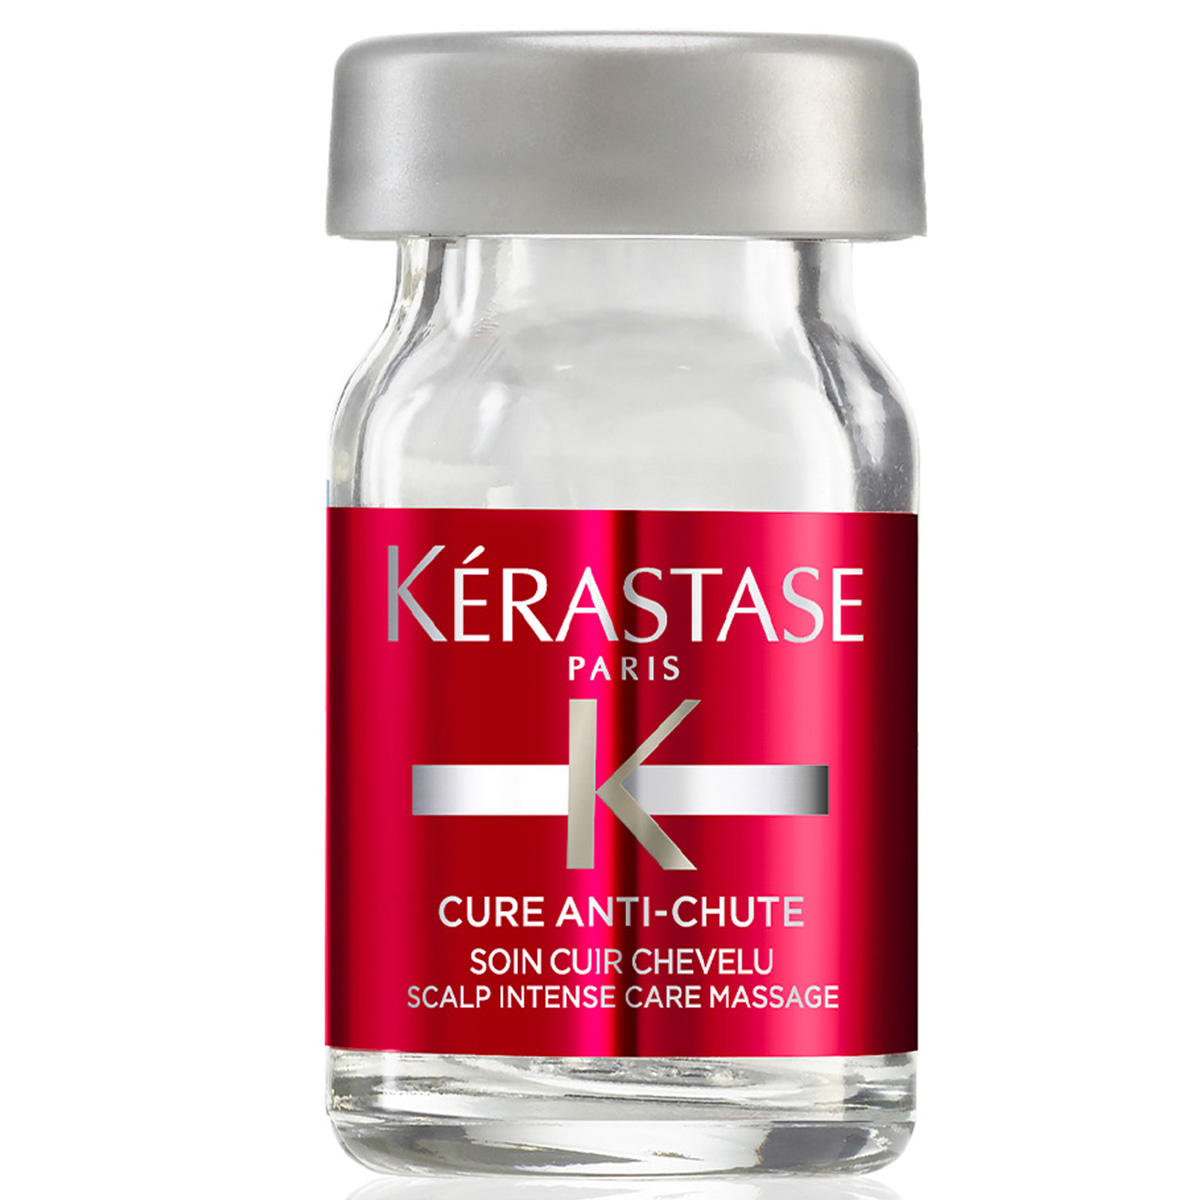 Kérastase Spécifique Cure Anti-Chute Package with 42 x 6 ml